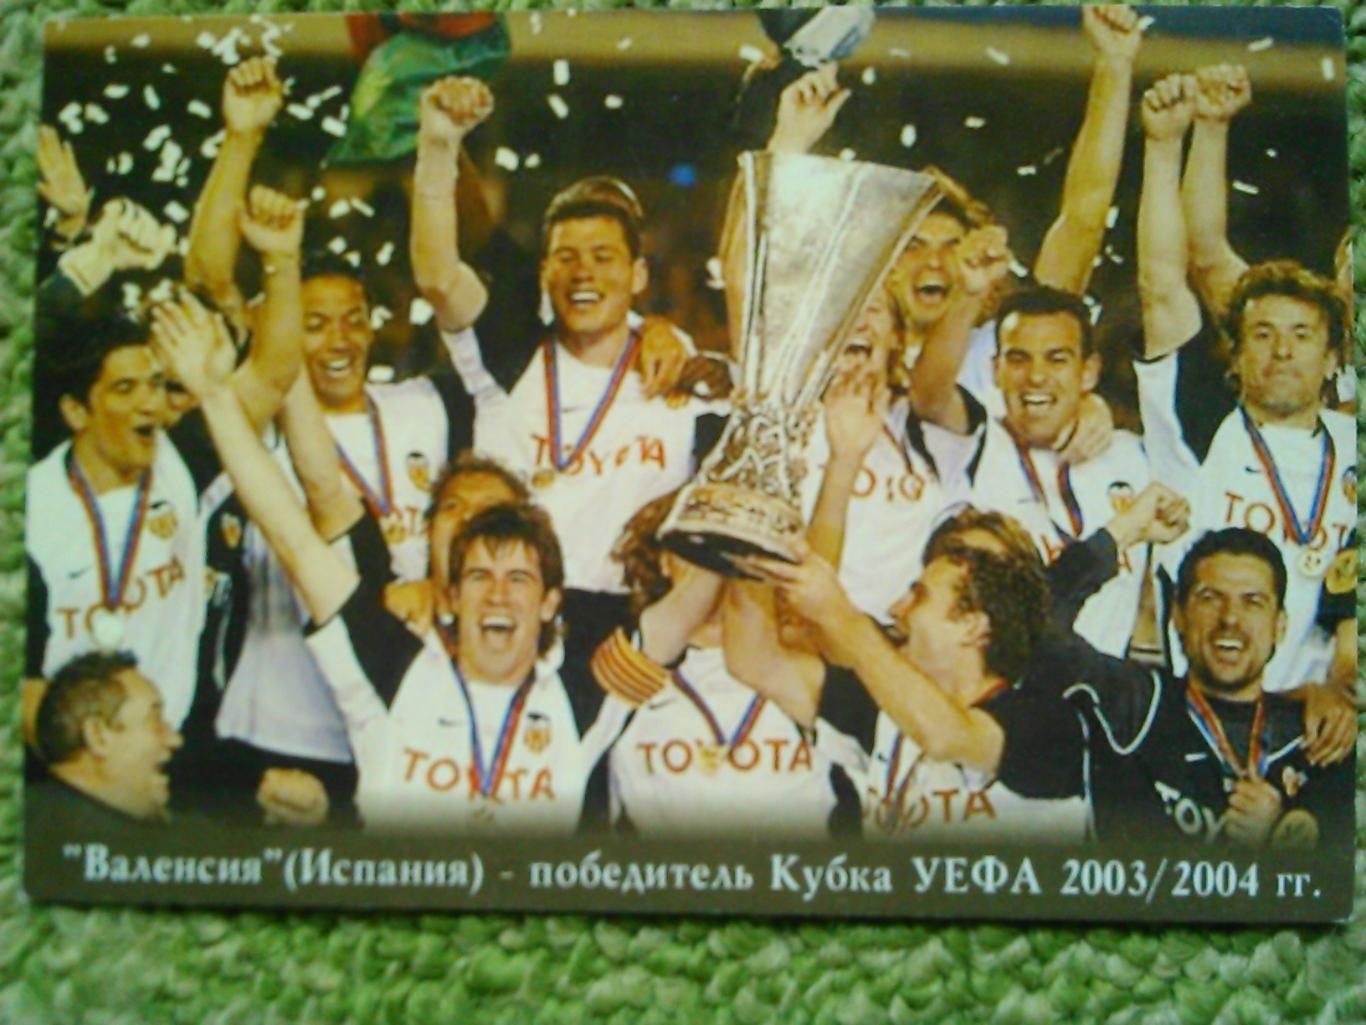 ВАЛЕНСИЯ. Испания побед. Кубка УЕФА 2003-4. календарик 2005. Оптом скидки до 45%